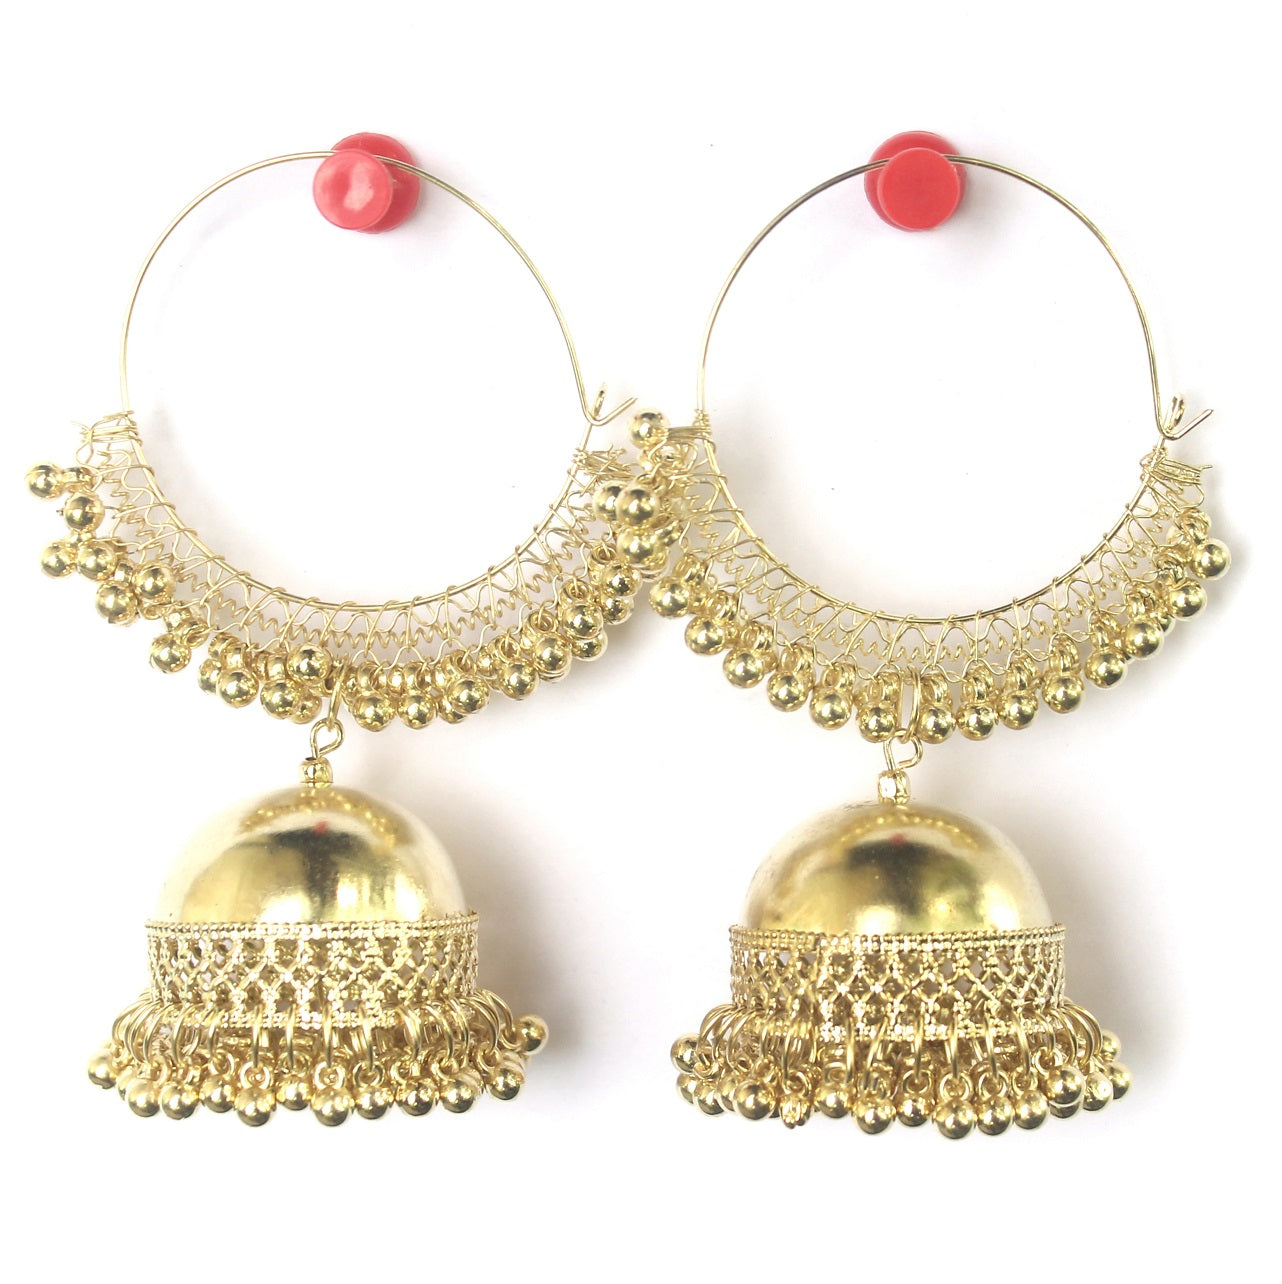 Vintage Ethnic Gypsy Indian Earrings For Women Boho Jewelry Ladies Retro  Round Bell Pearls Tassel Mirror Jhumka Earrings Gift